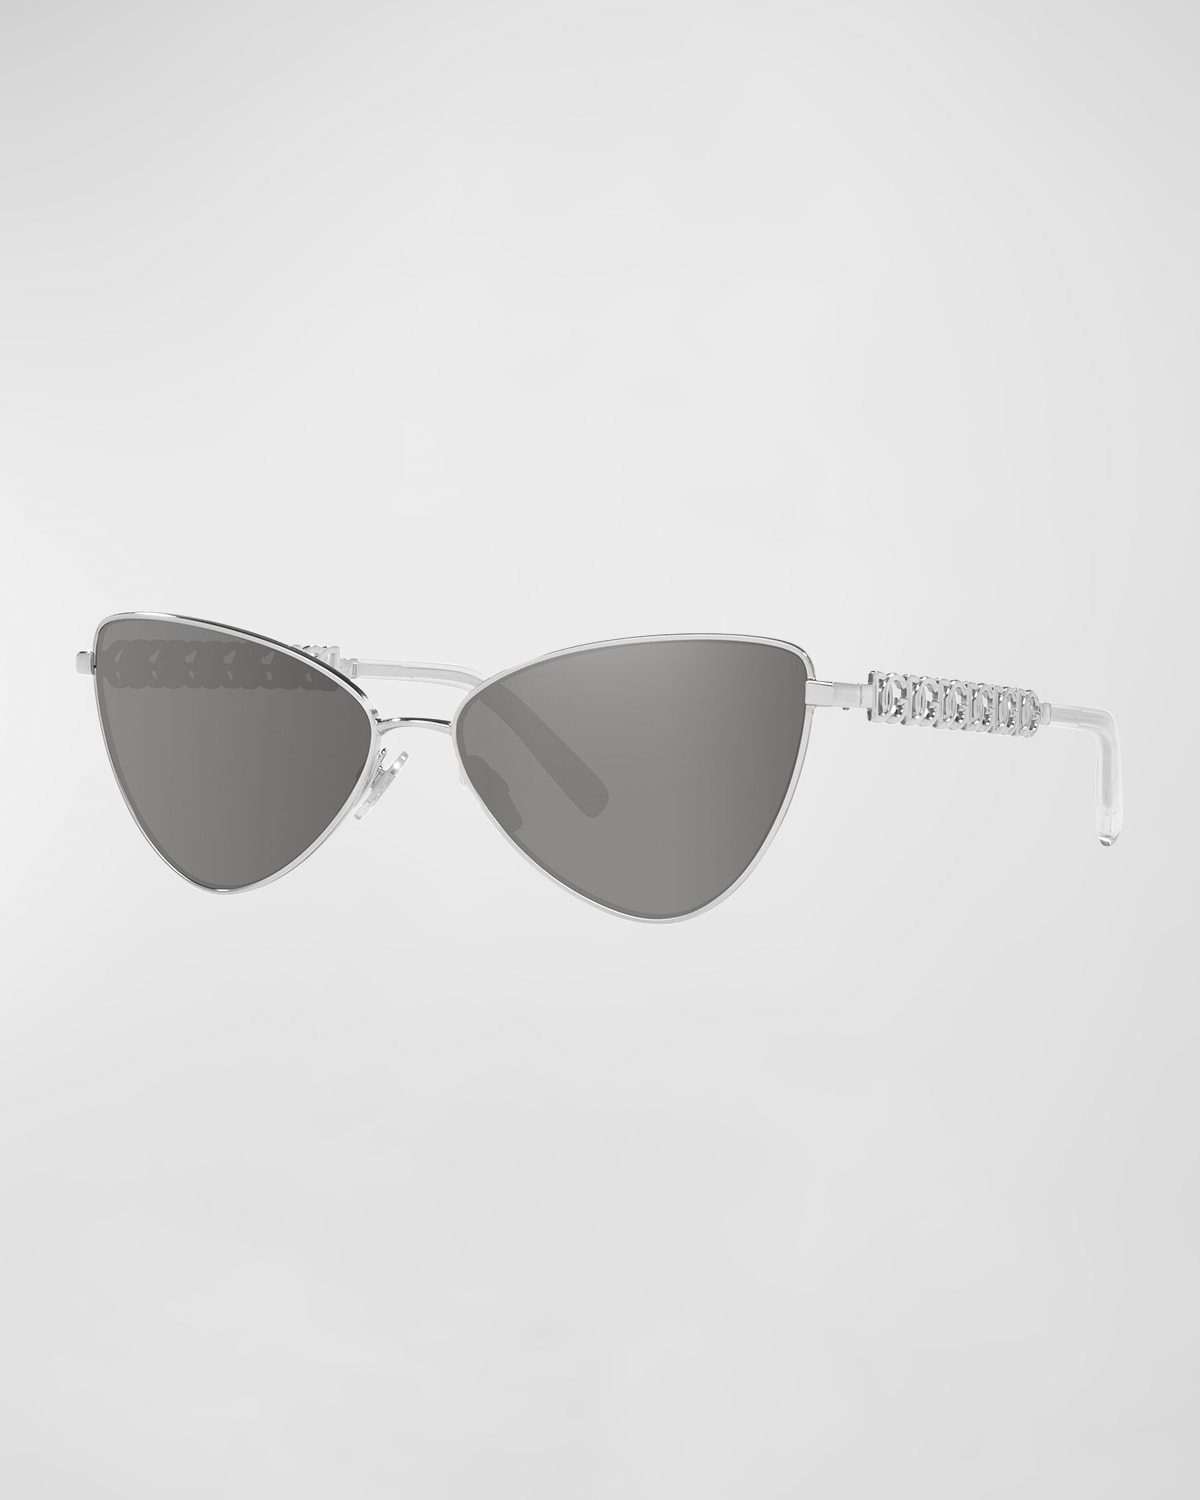 Versace Pink Medusa Steel And Plastic Butterfly Sunglasses Neiman Marcus 